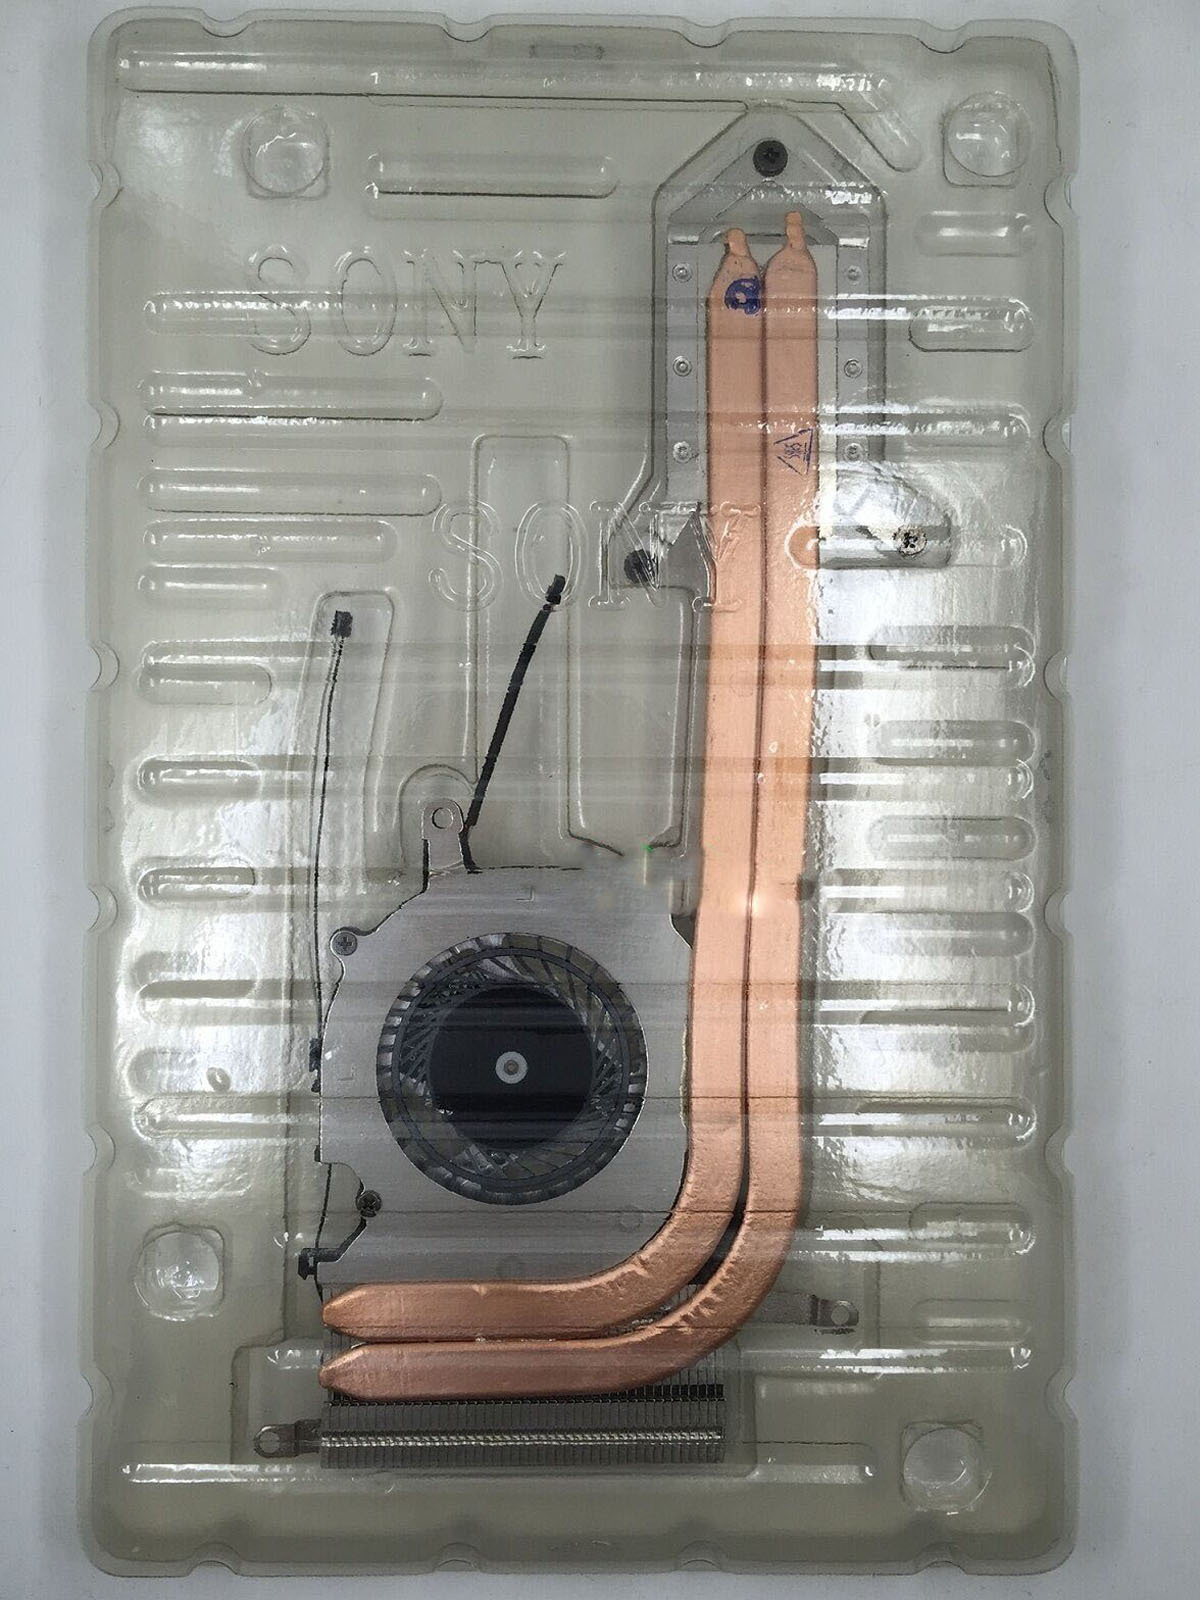 Primary image for SONY VAIO udqfvsr01df0 pro13 svp13 svp132a svp132100c cooling fan with heatsink